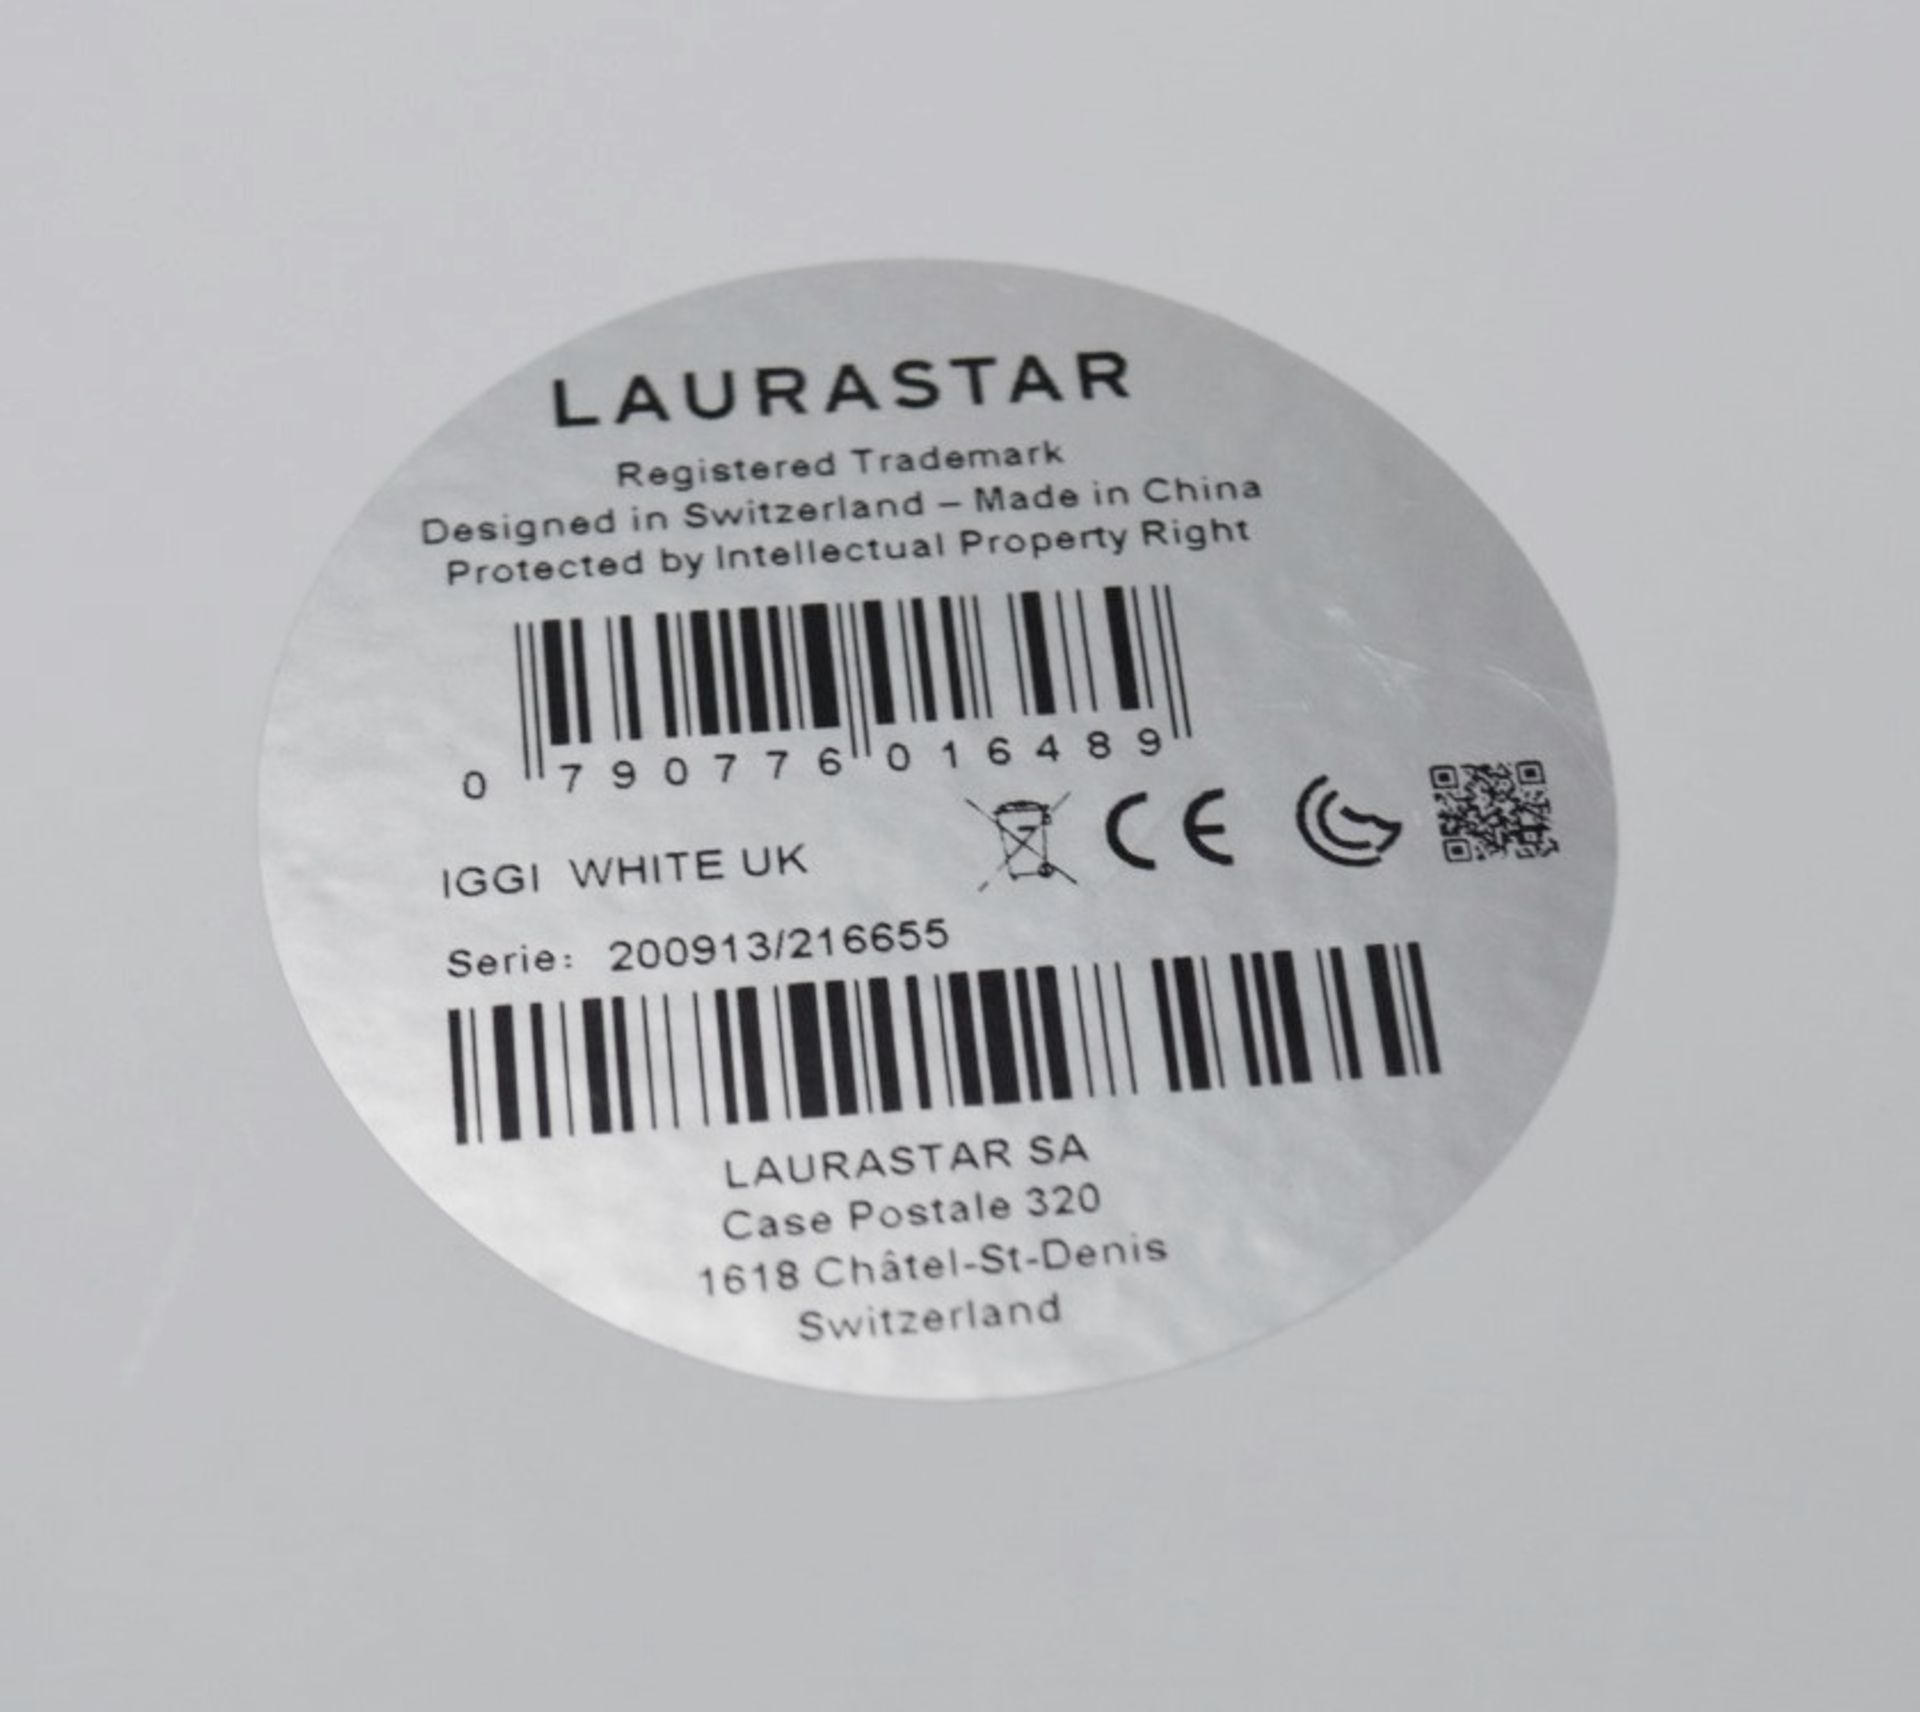 1 x Laurastar Handheld Steamer - Ref: HHW30/JUL21 - CL679 - Location: Altrincham WA14 Condition - Image 11 of 11